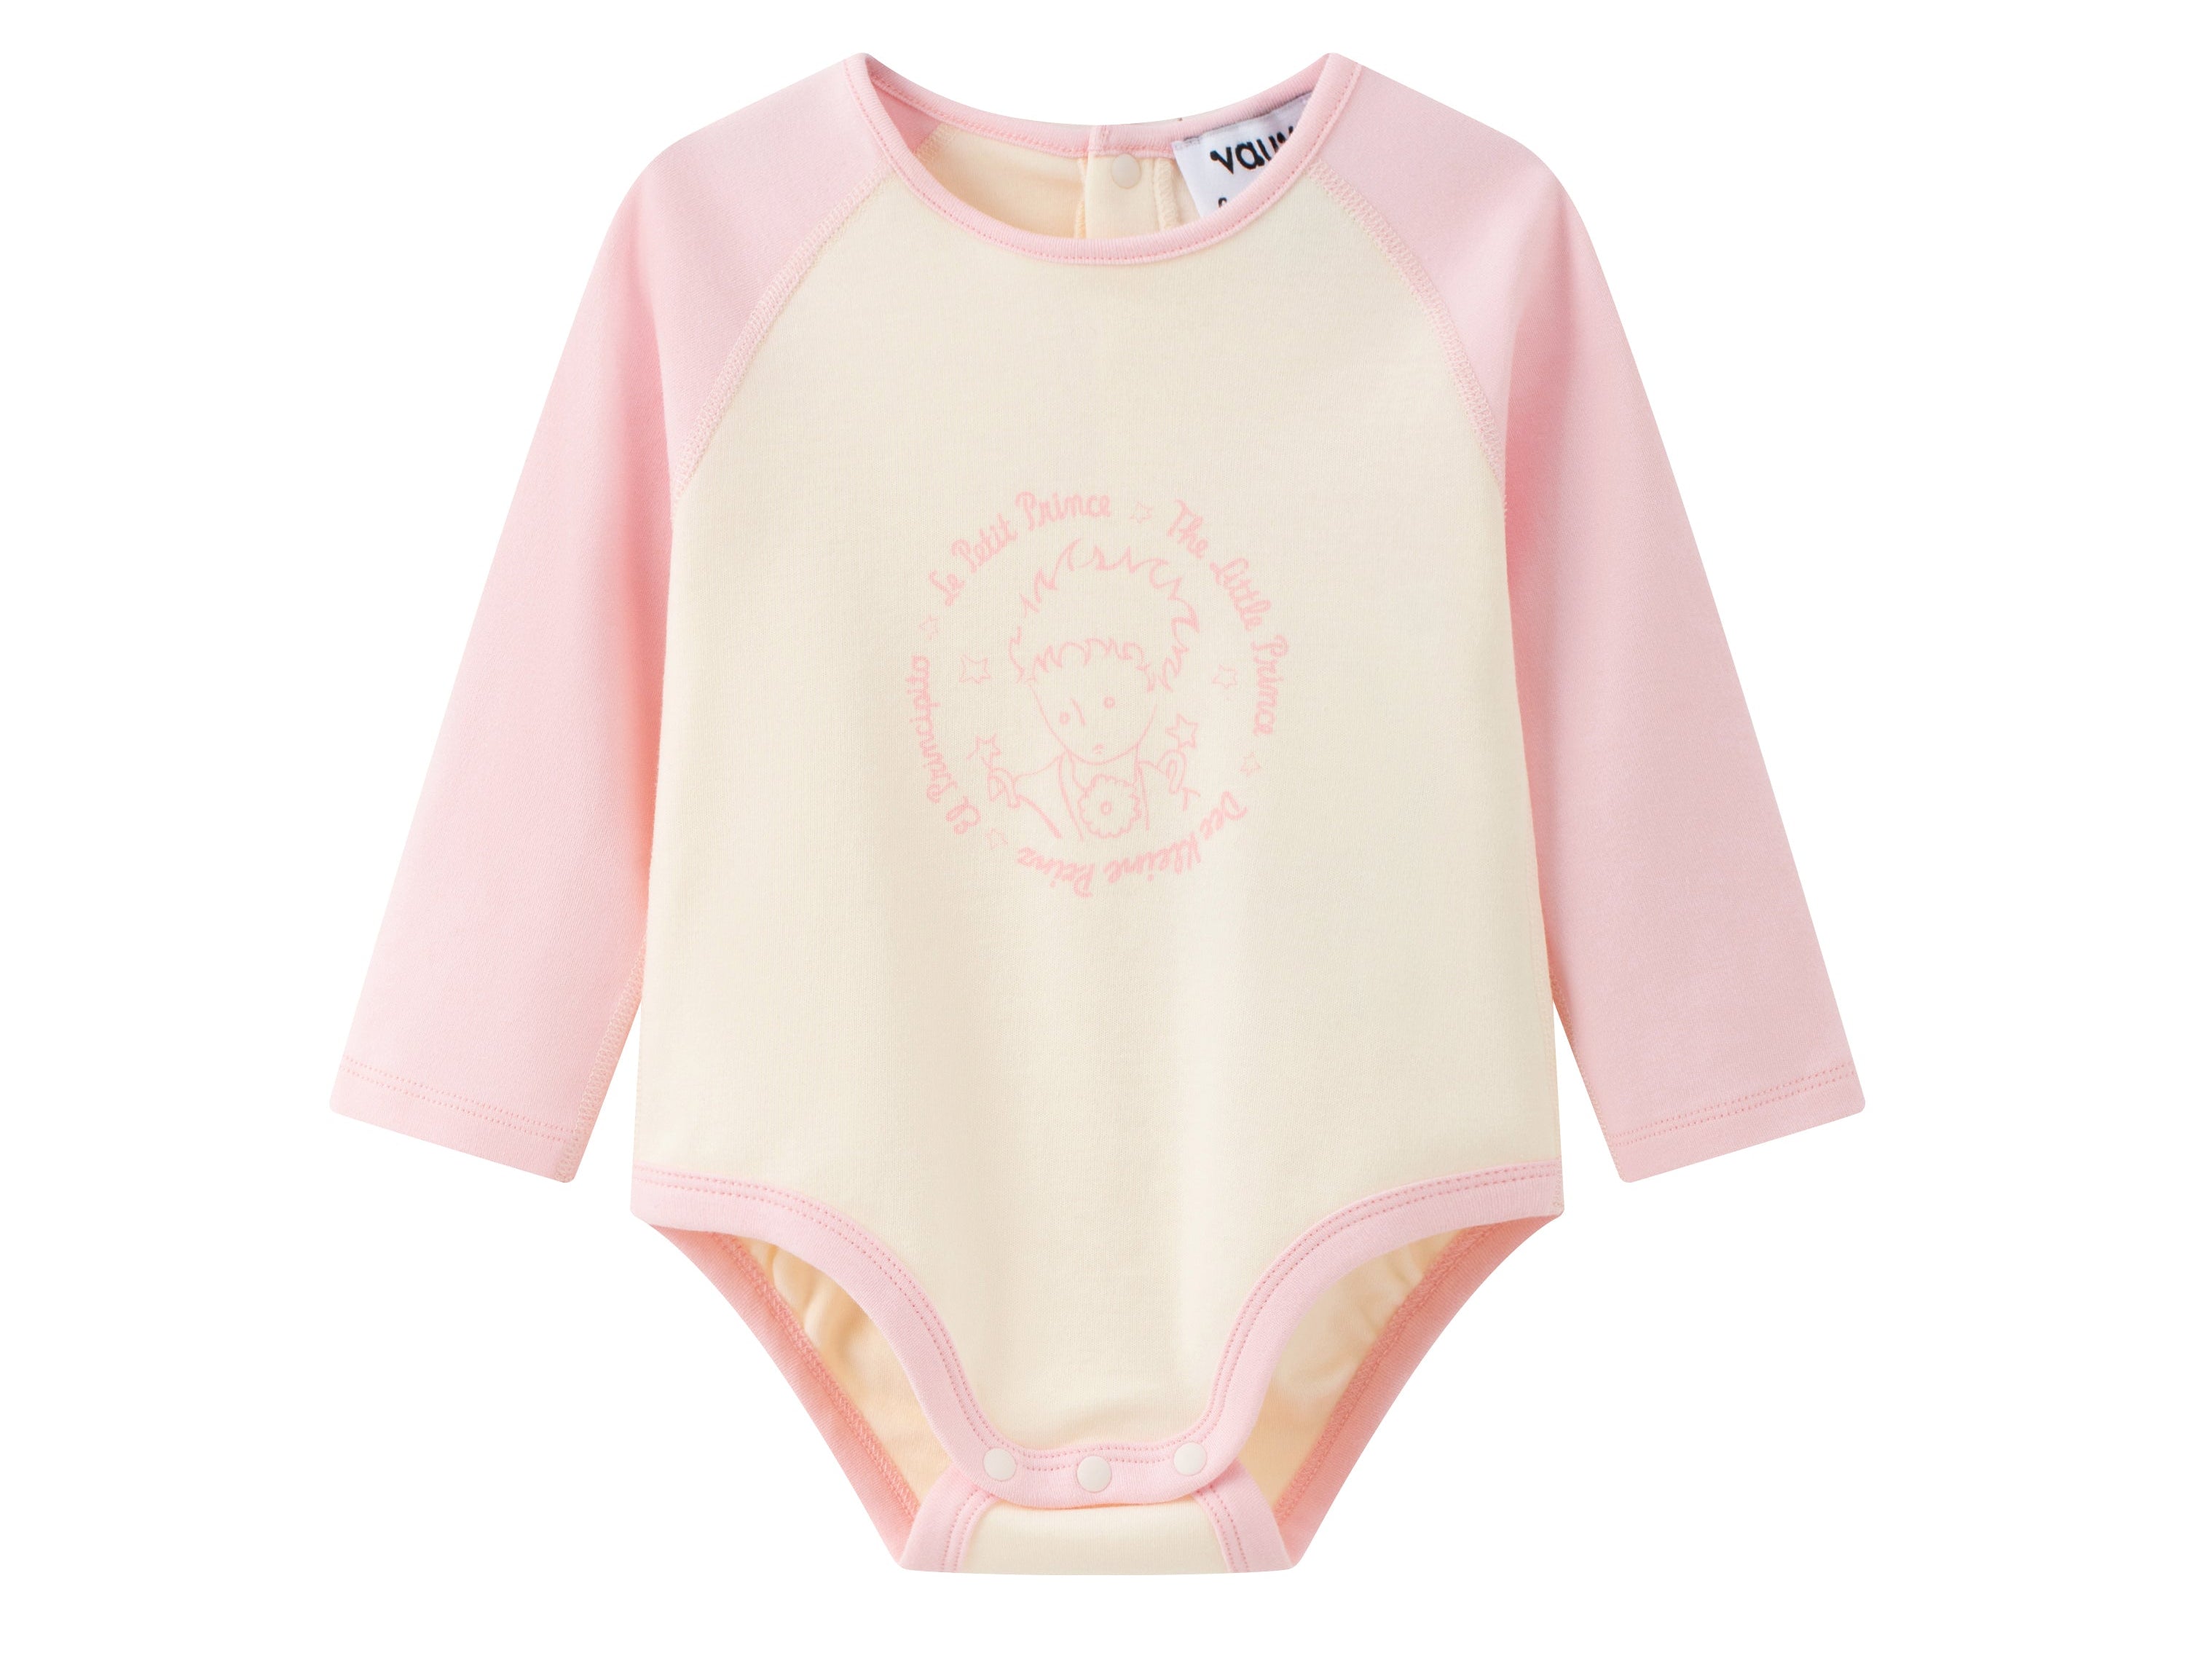 Vauva x Le Petit Prince - Baby Logo Print Longsleeve Bodysuit (Pink) product image front